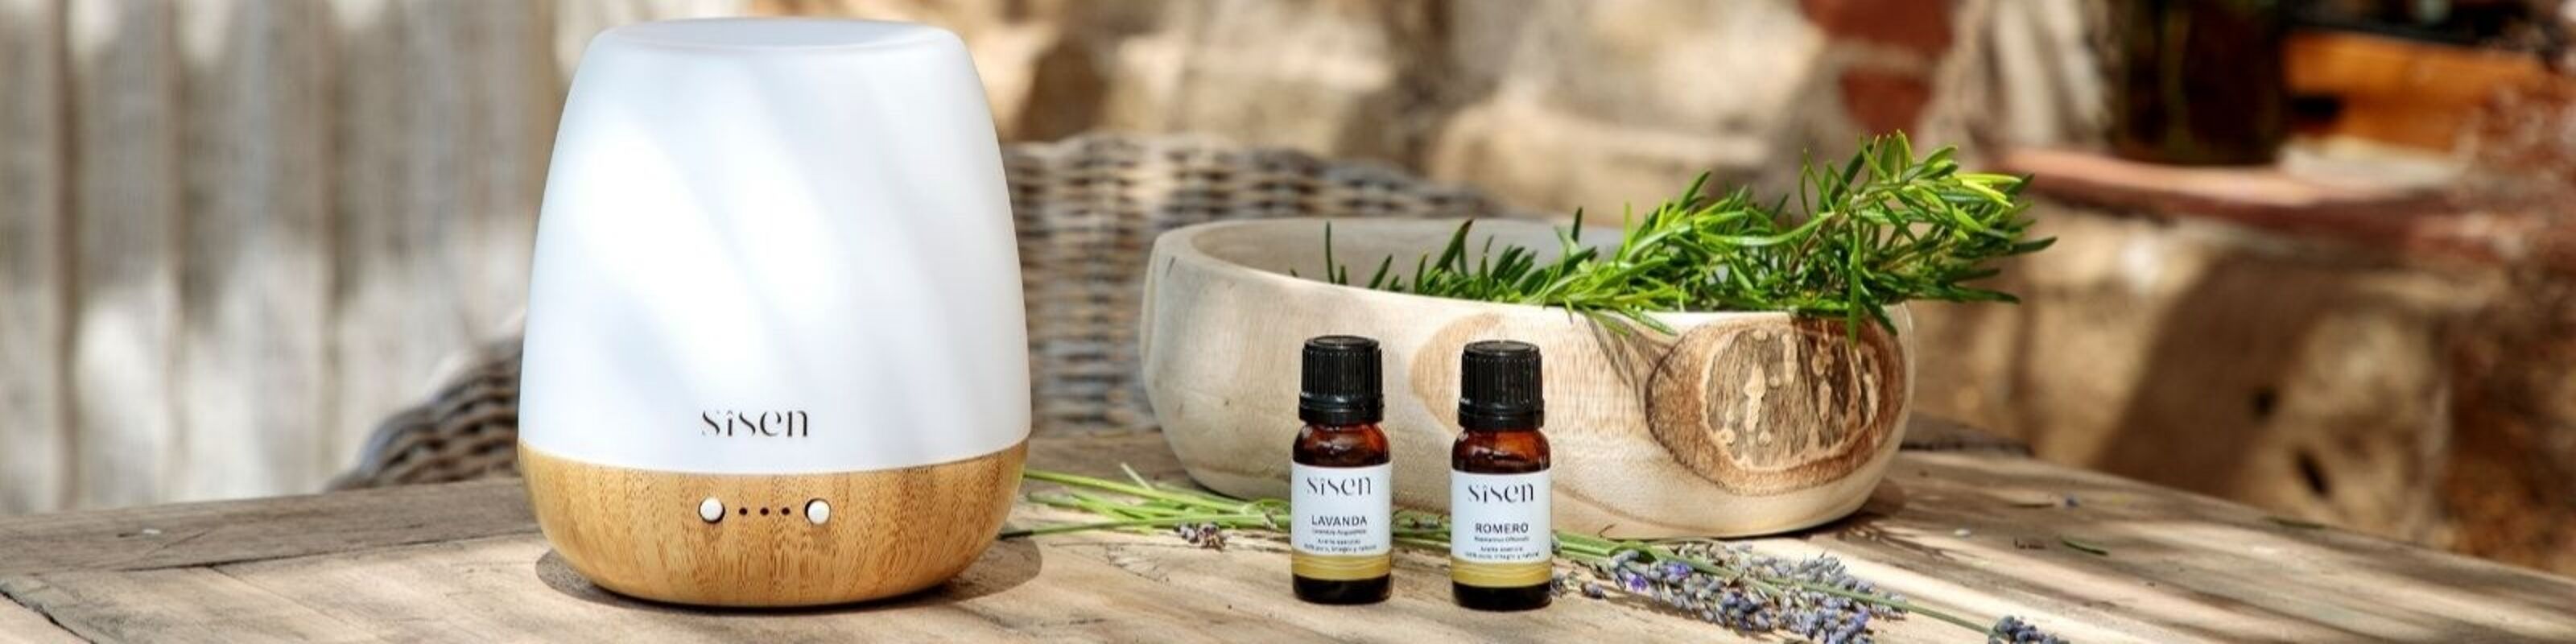 Sisen Oil Essentials - Compra online aceites esenciales naturales